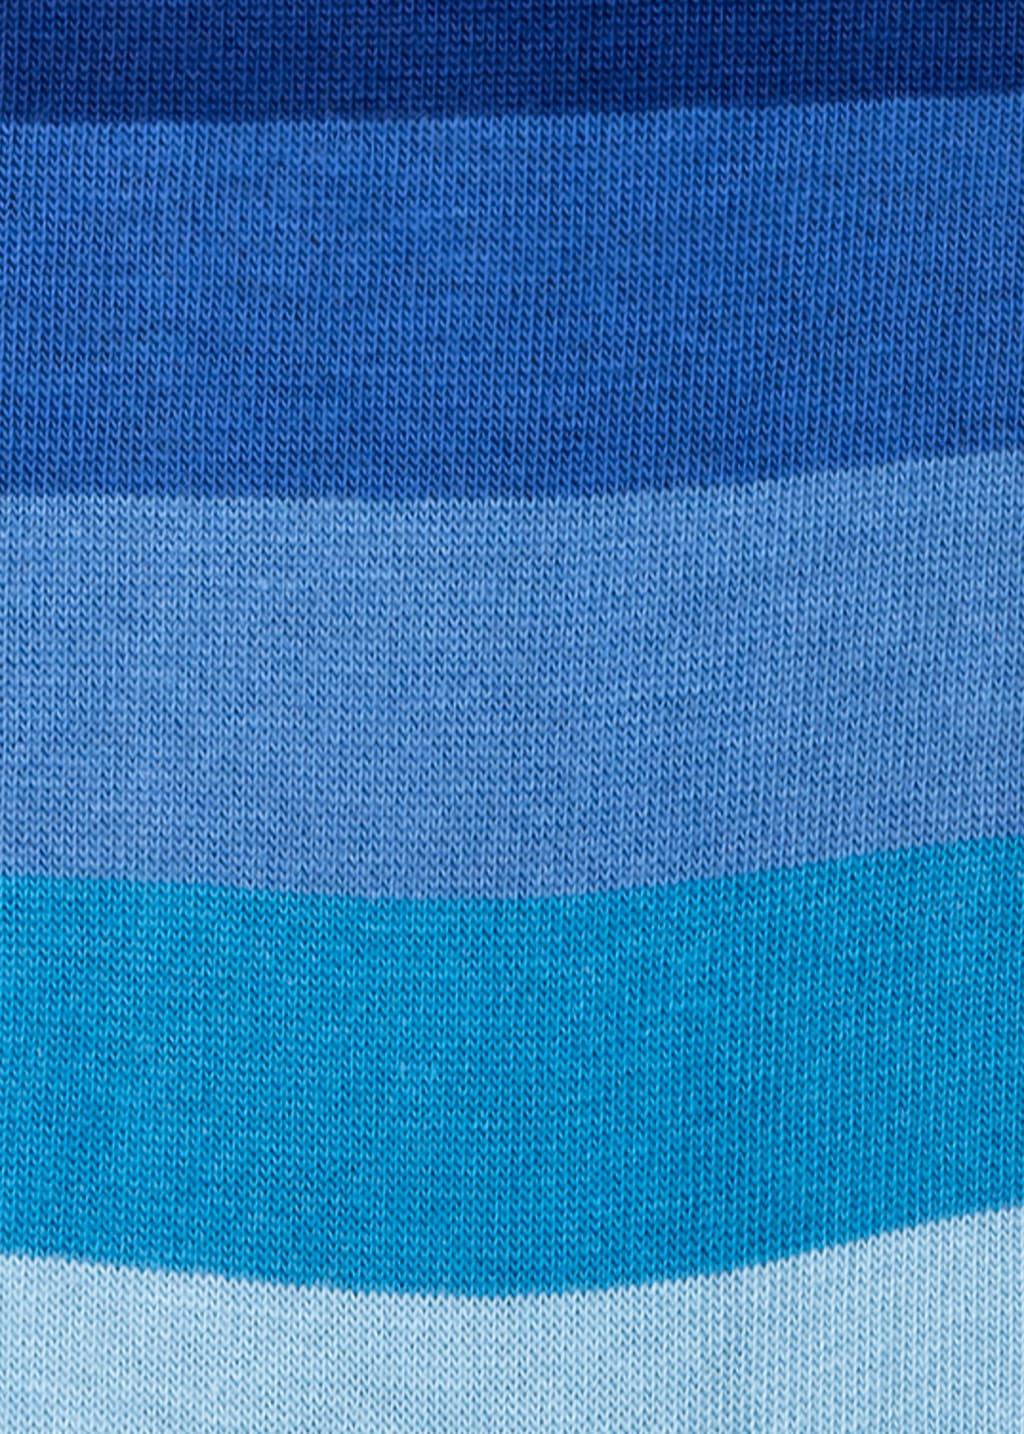 Detail View - Blue Cotton-Blend Gradient Stripe Socks Paul Smith